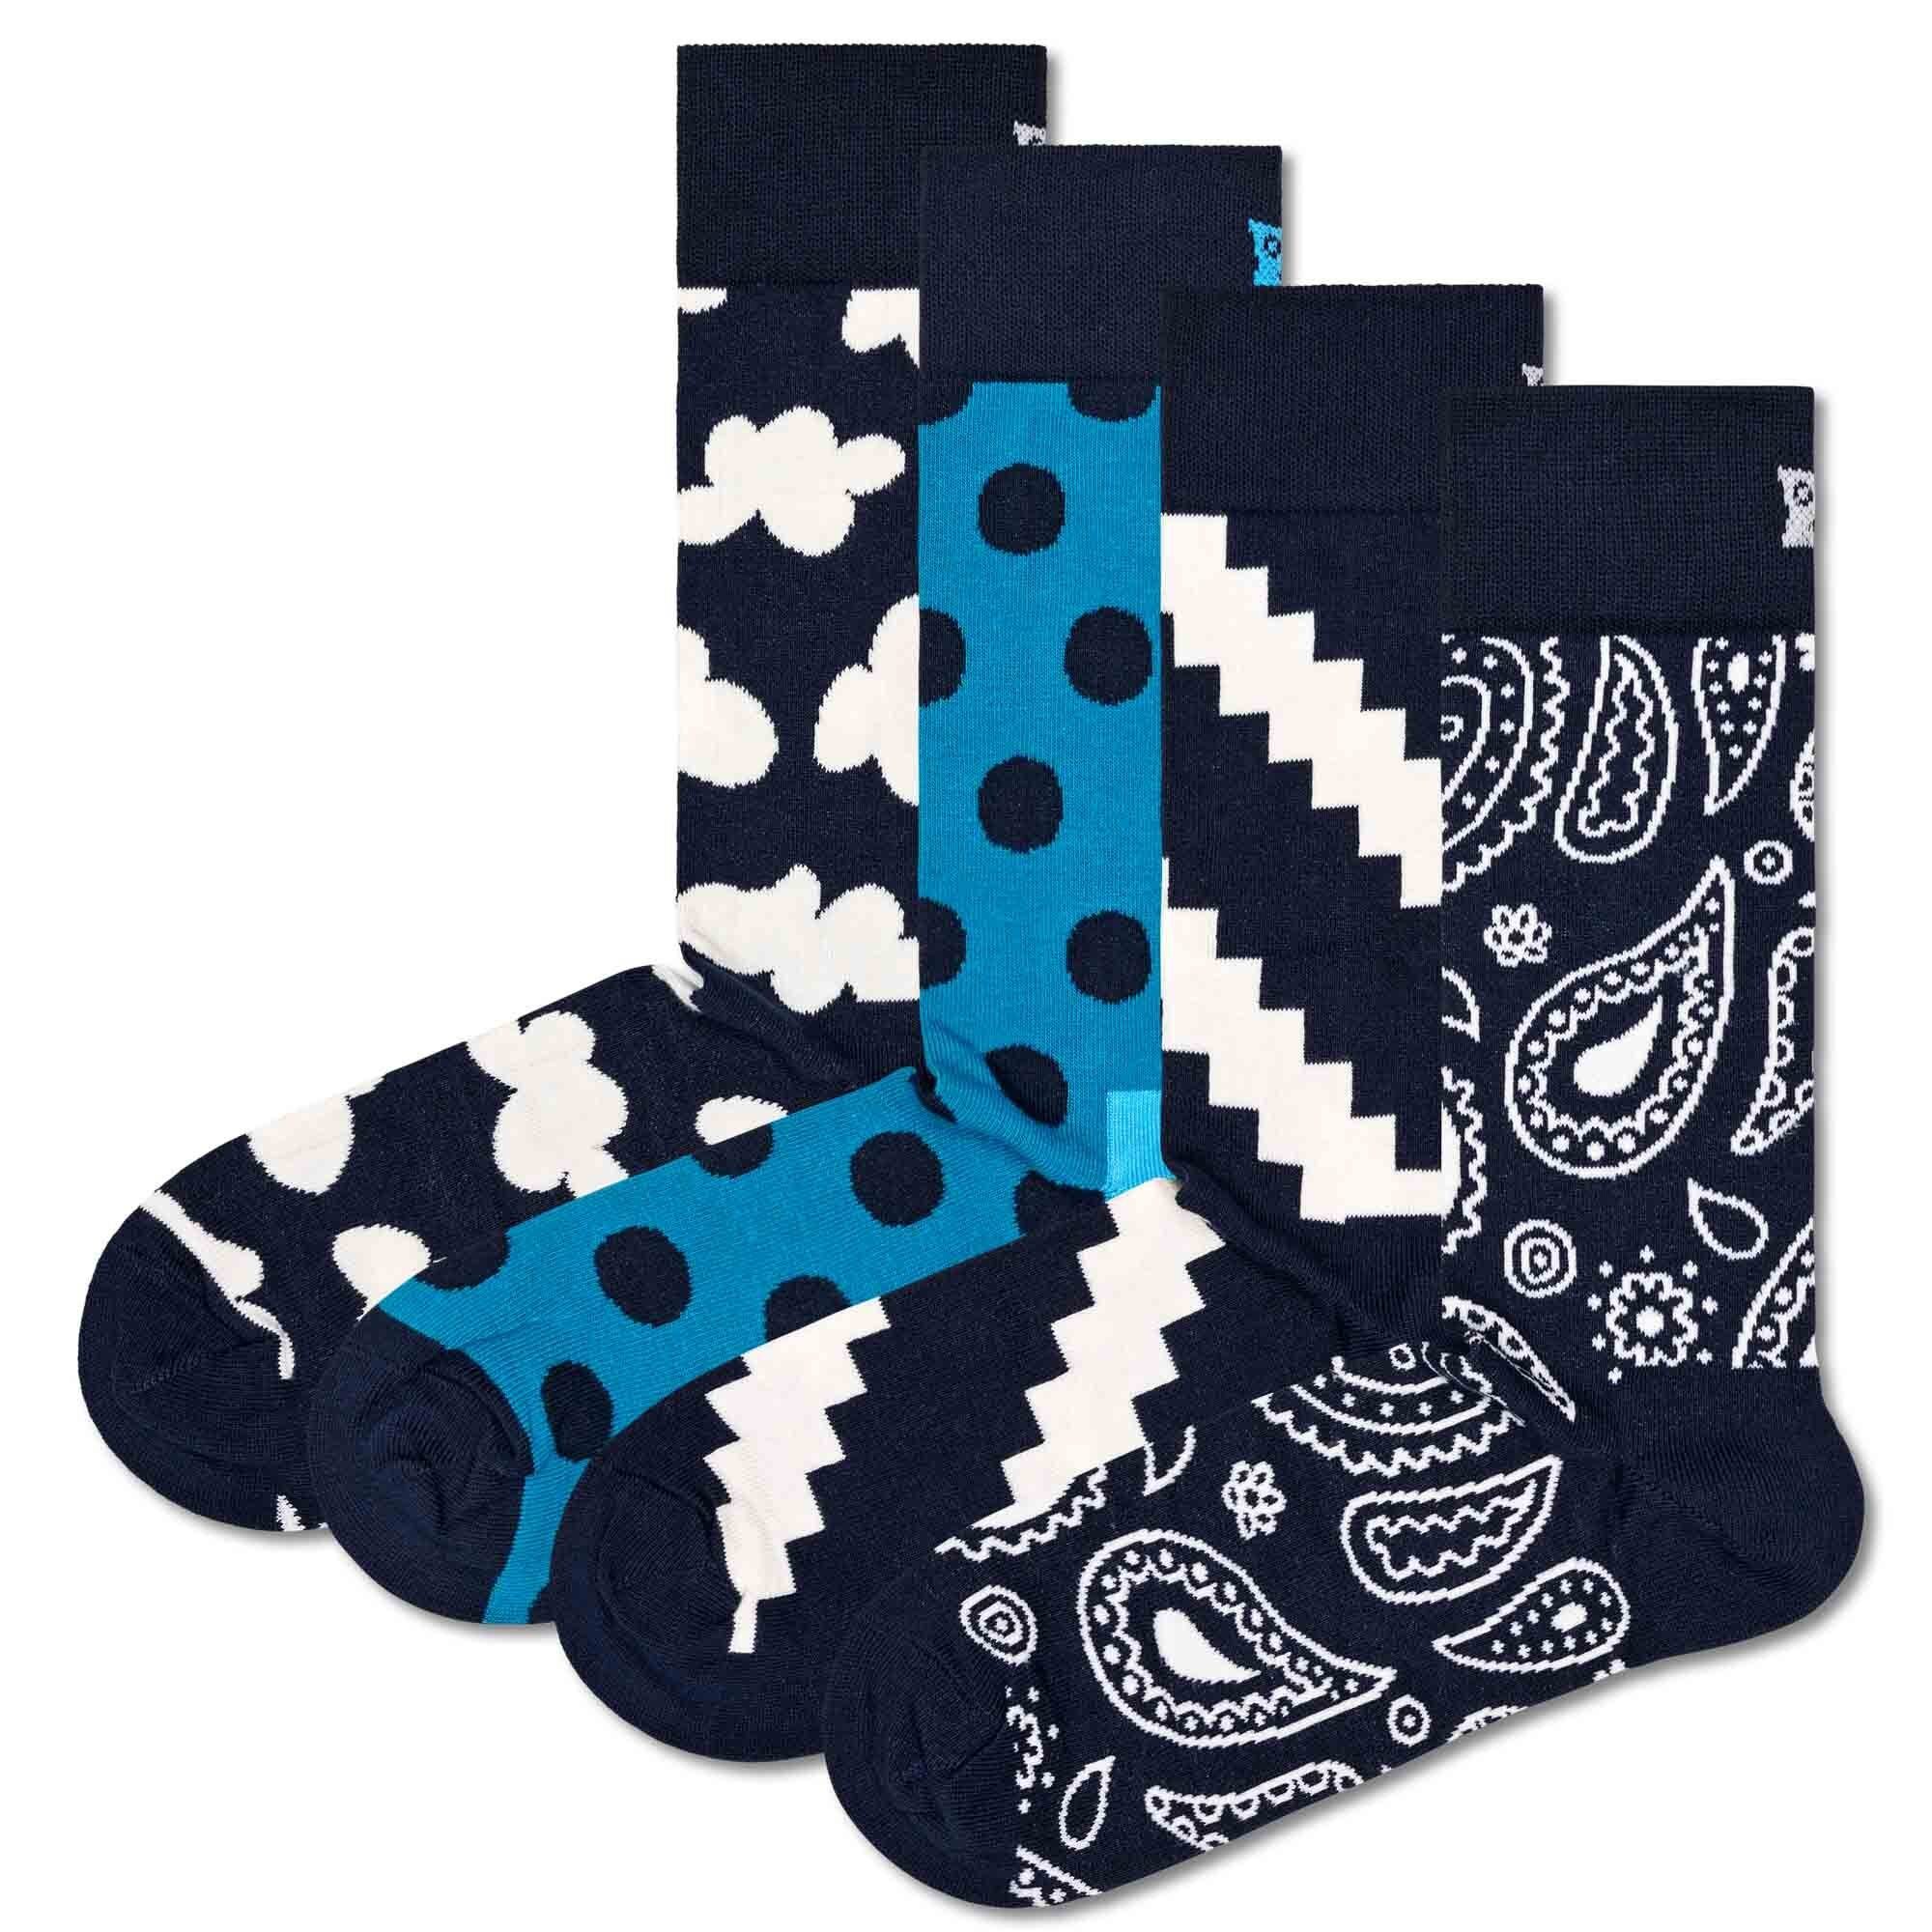 Happy Socks Kurzsocken Geschenkbox Pack Unisex Socken, Blues Moody 4er